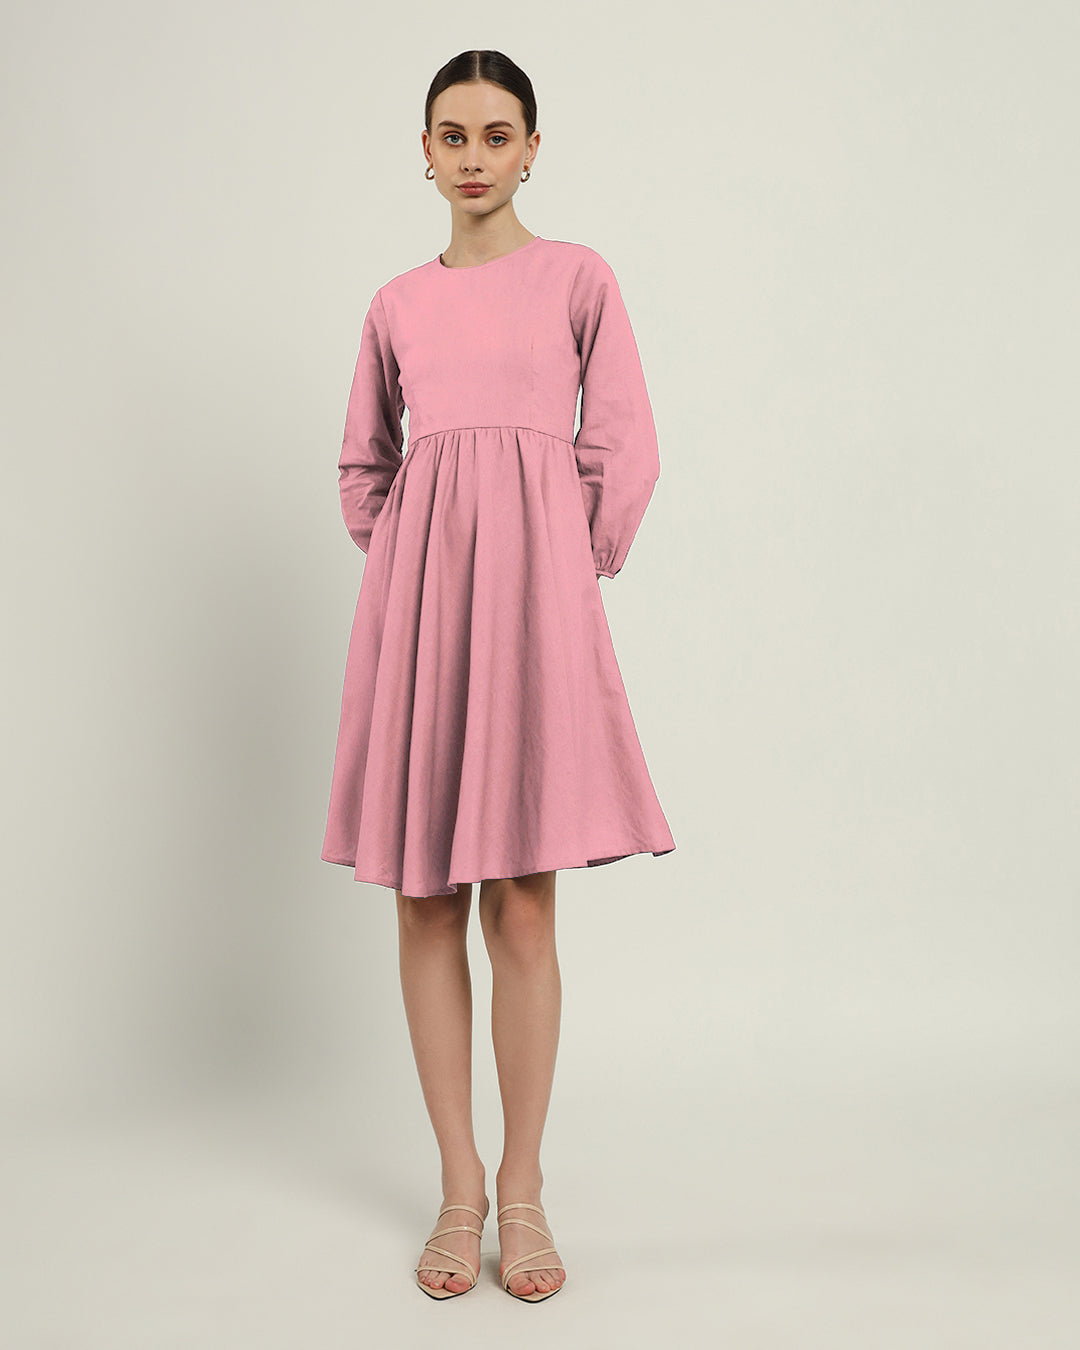 The Exeter Fondant Pink Dress